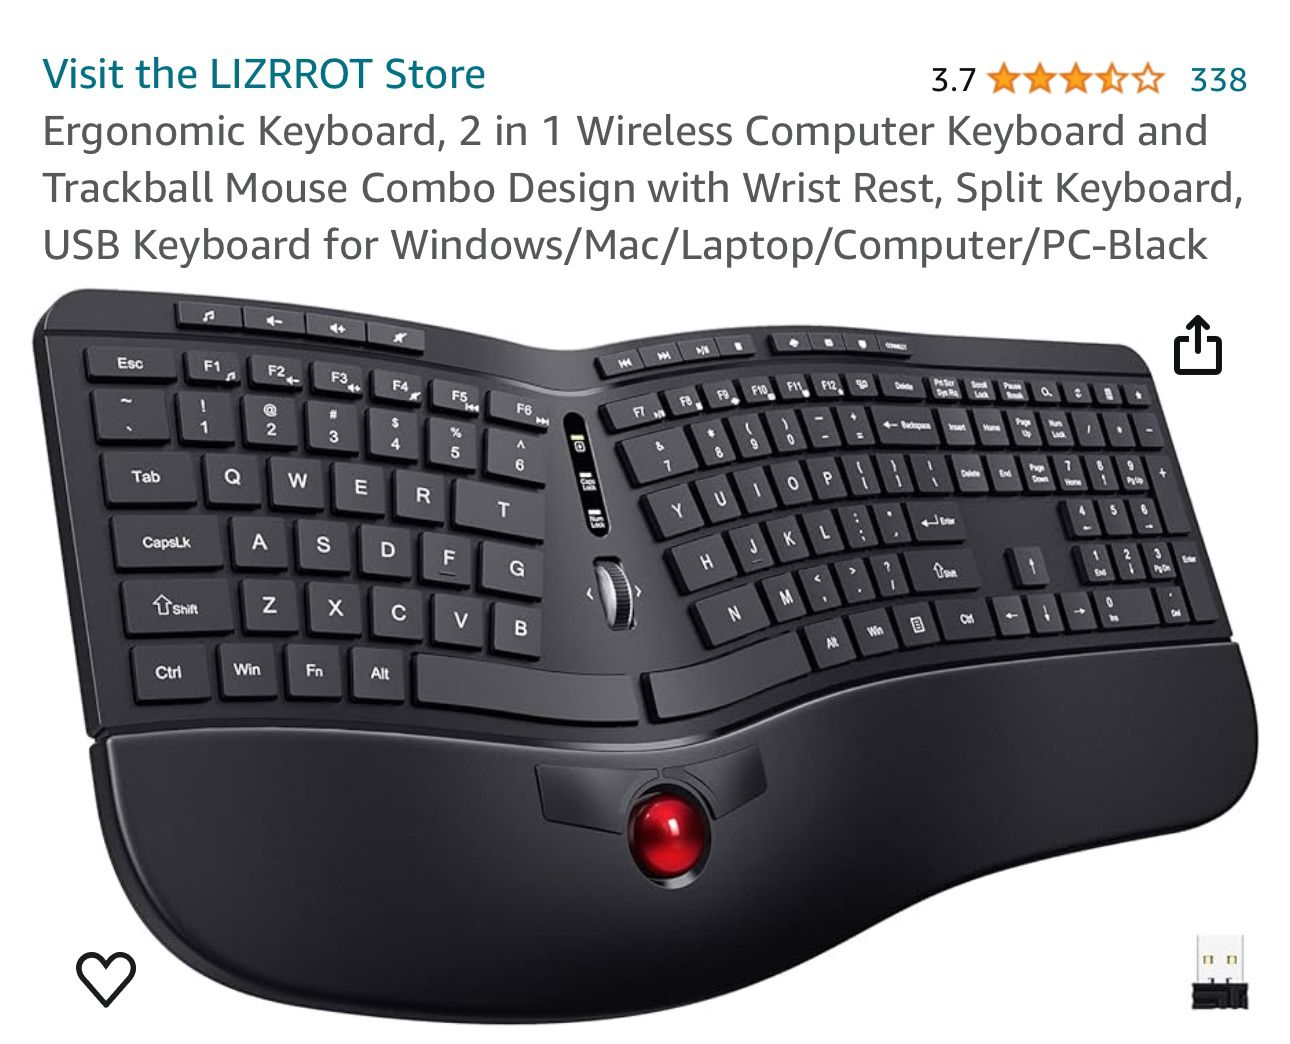 Ergonomic Keyboard, 2 in 1 Wireless Computer Keyboard and Trackball Mouse Combo Design with Wrist Rest, Split Keyboard